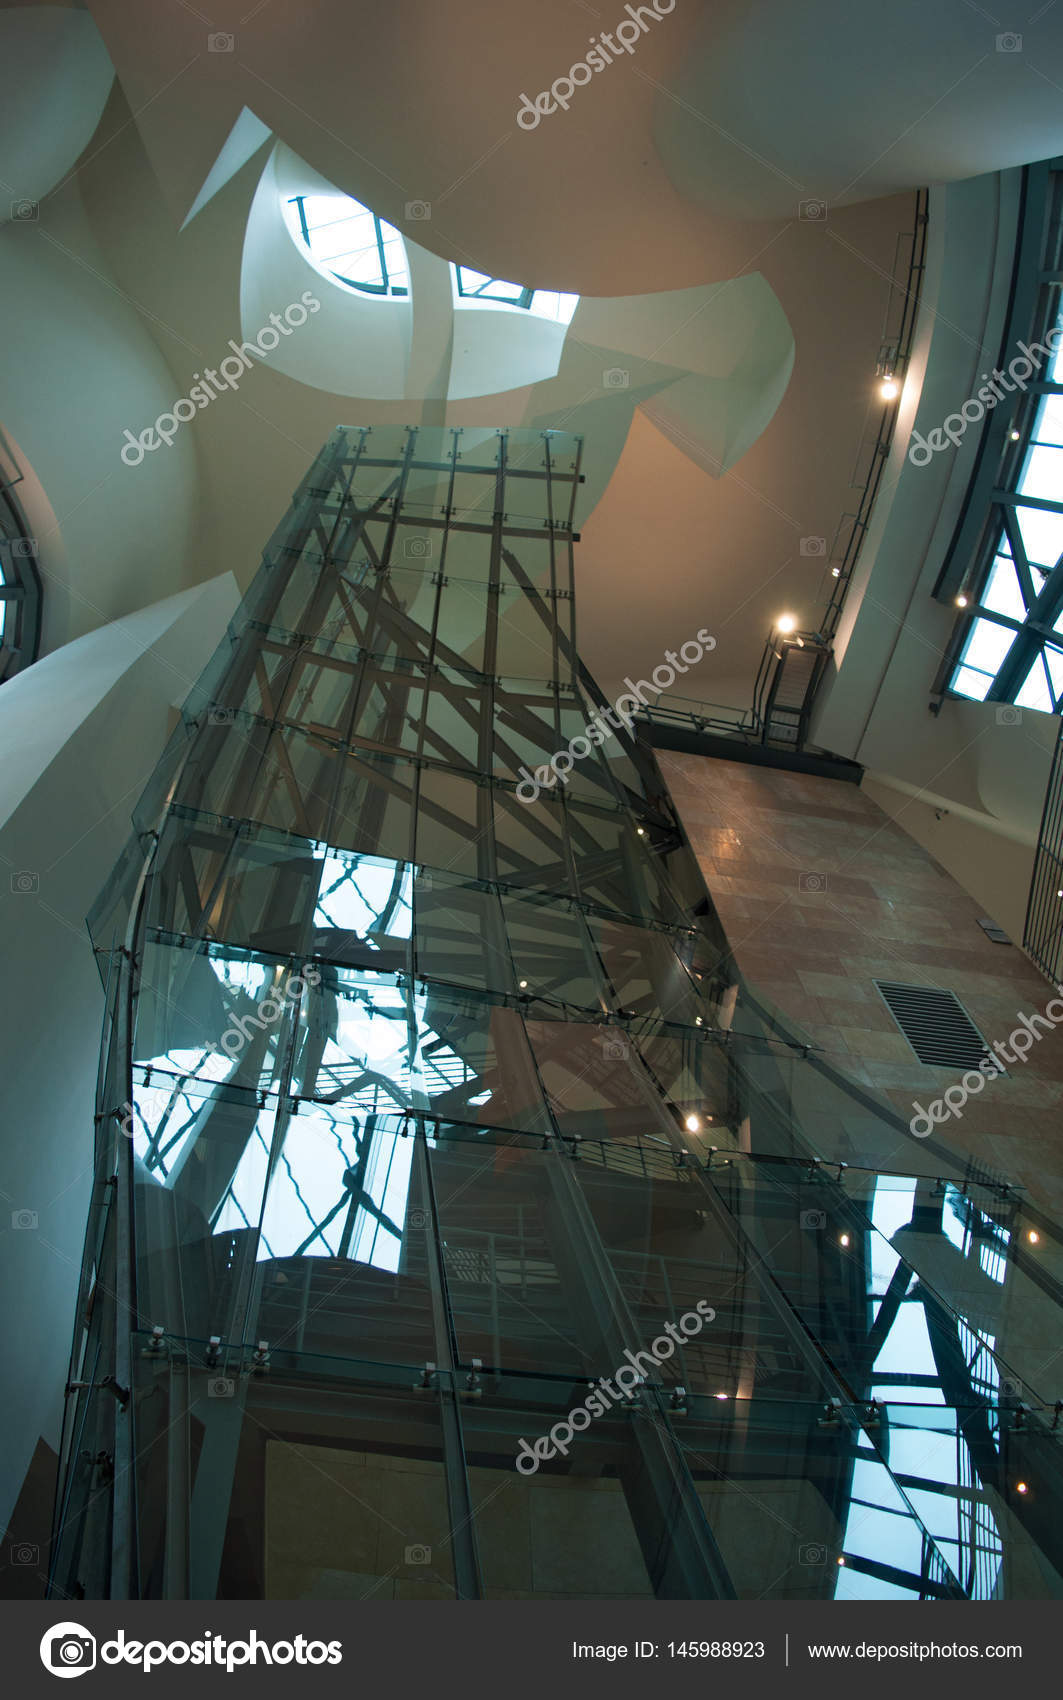 Spain The Interiors Of The Guggenheim Museum Bilbao The